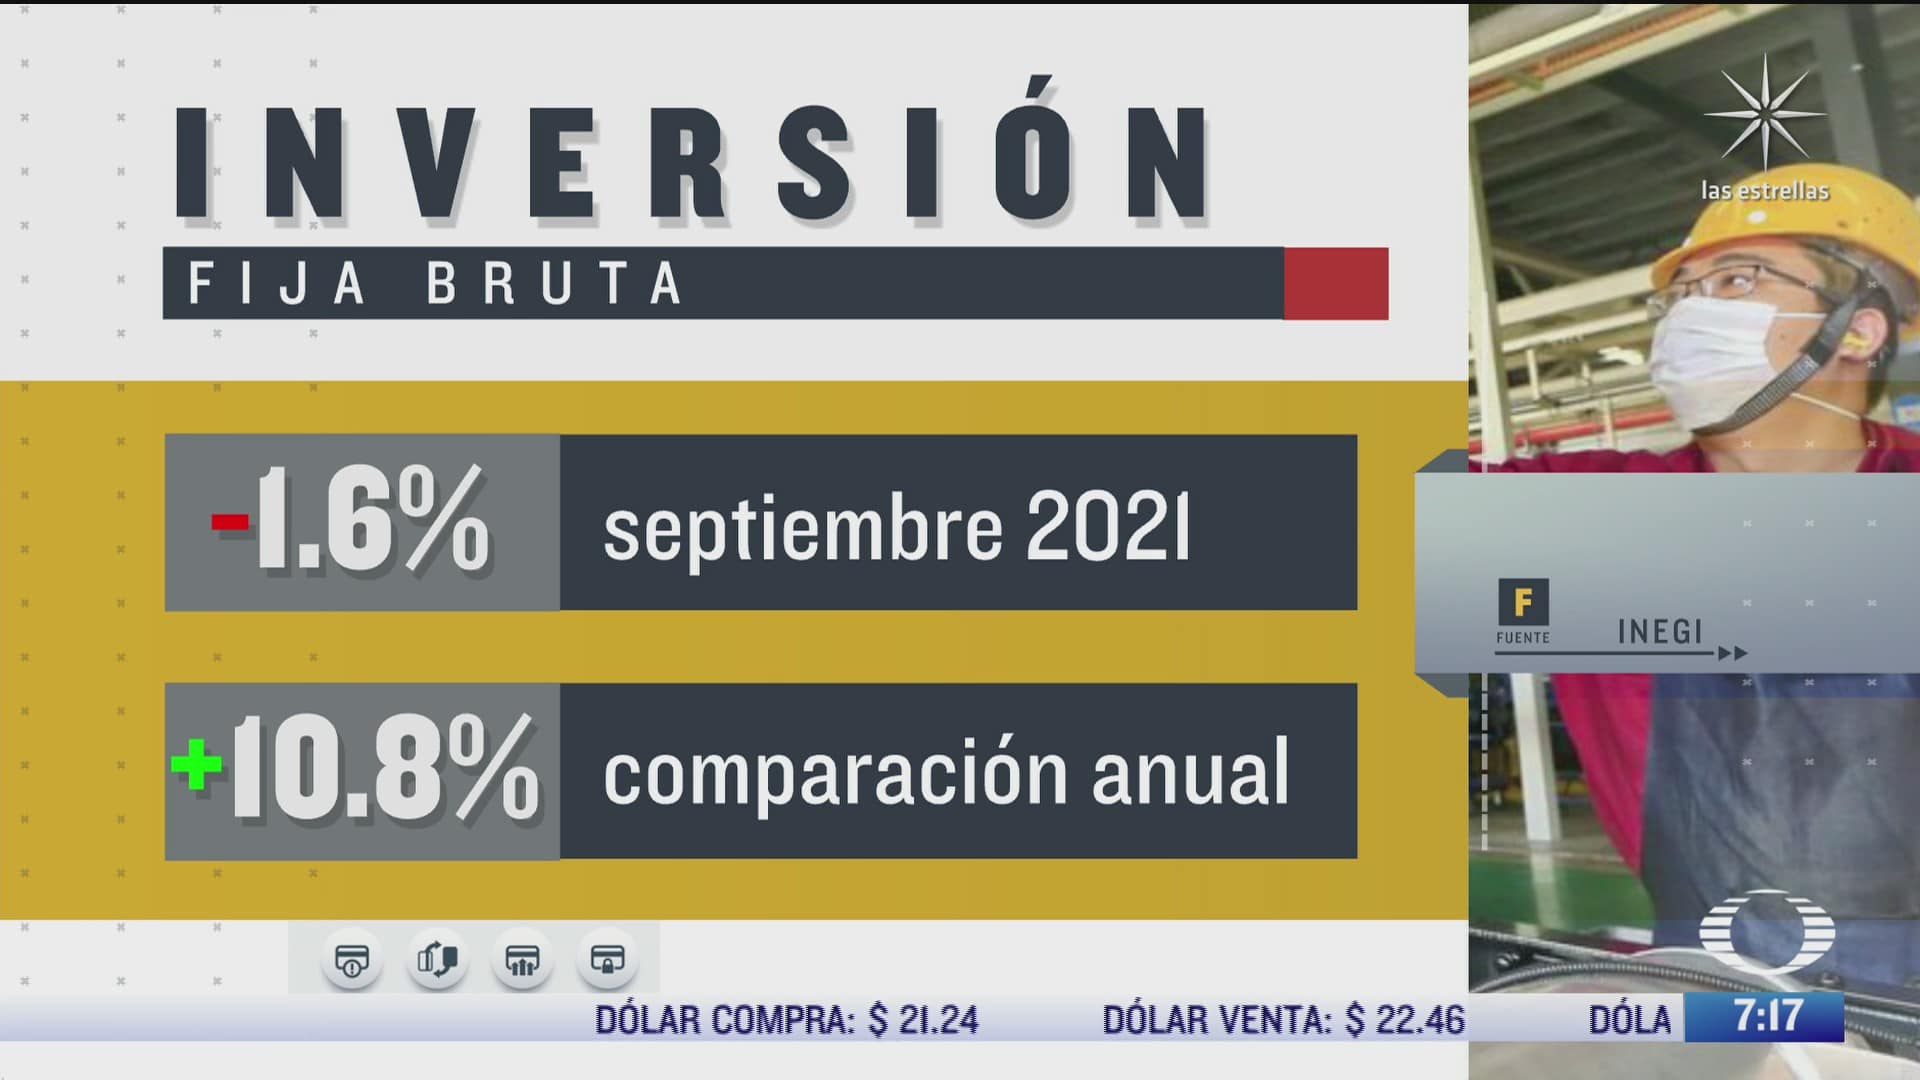 inversion fija bruta disminuye 1 6 en septiembre de 2021 segun inegi